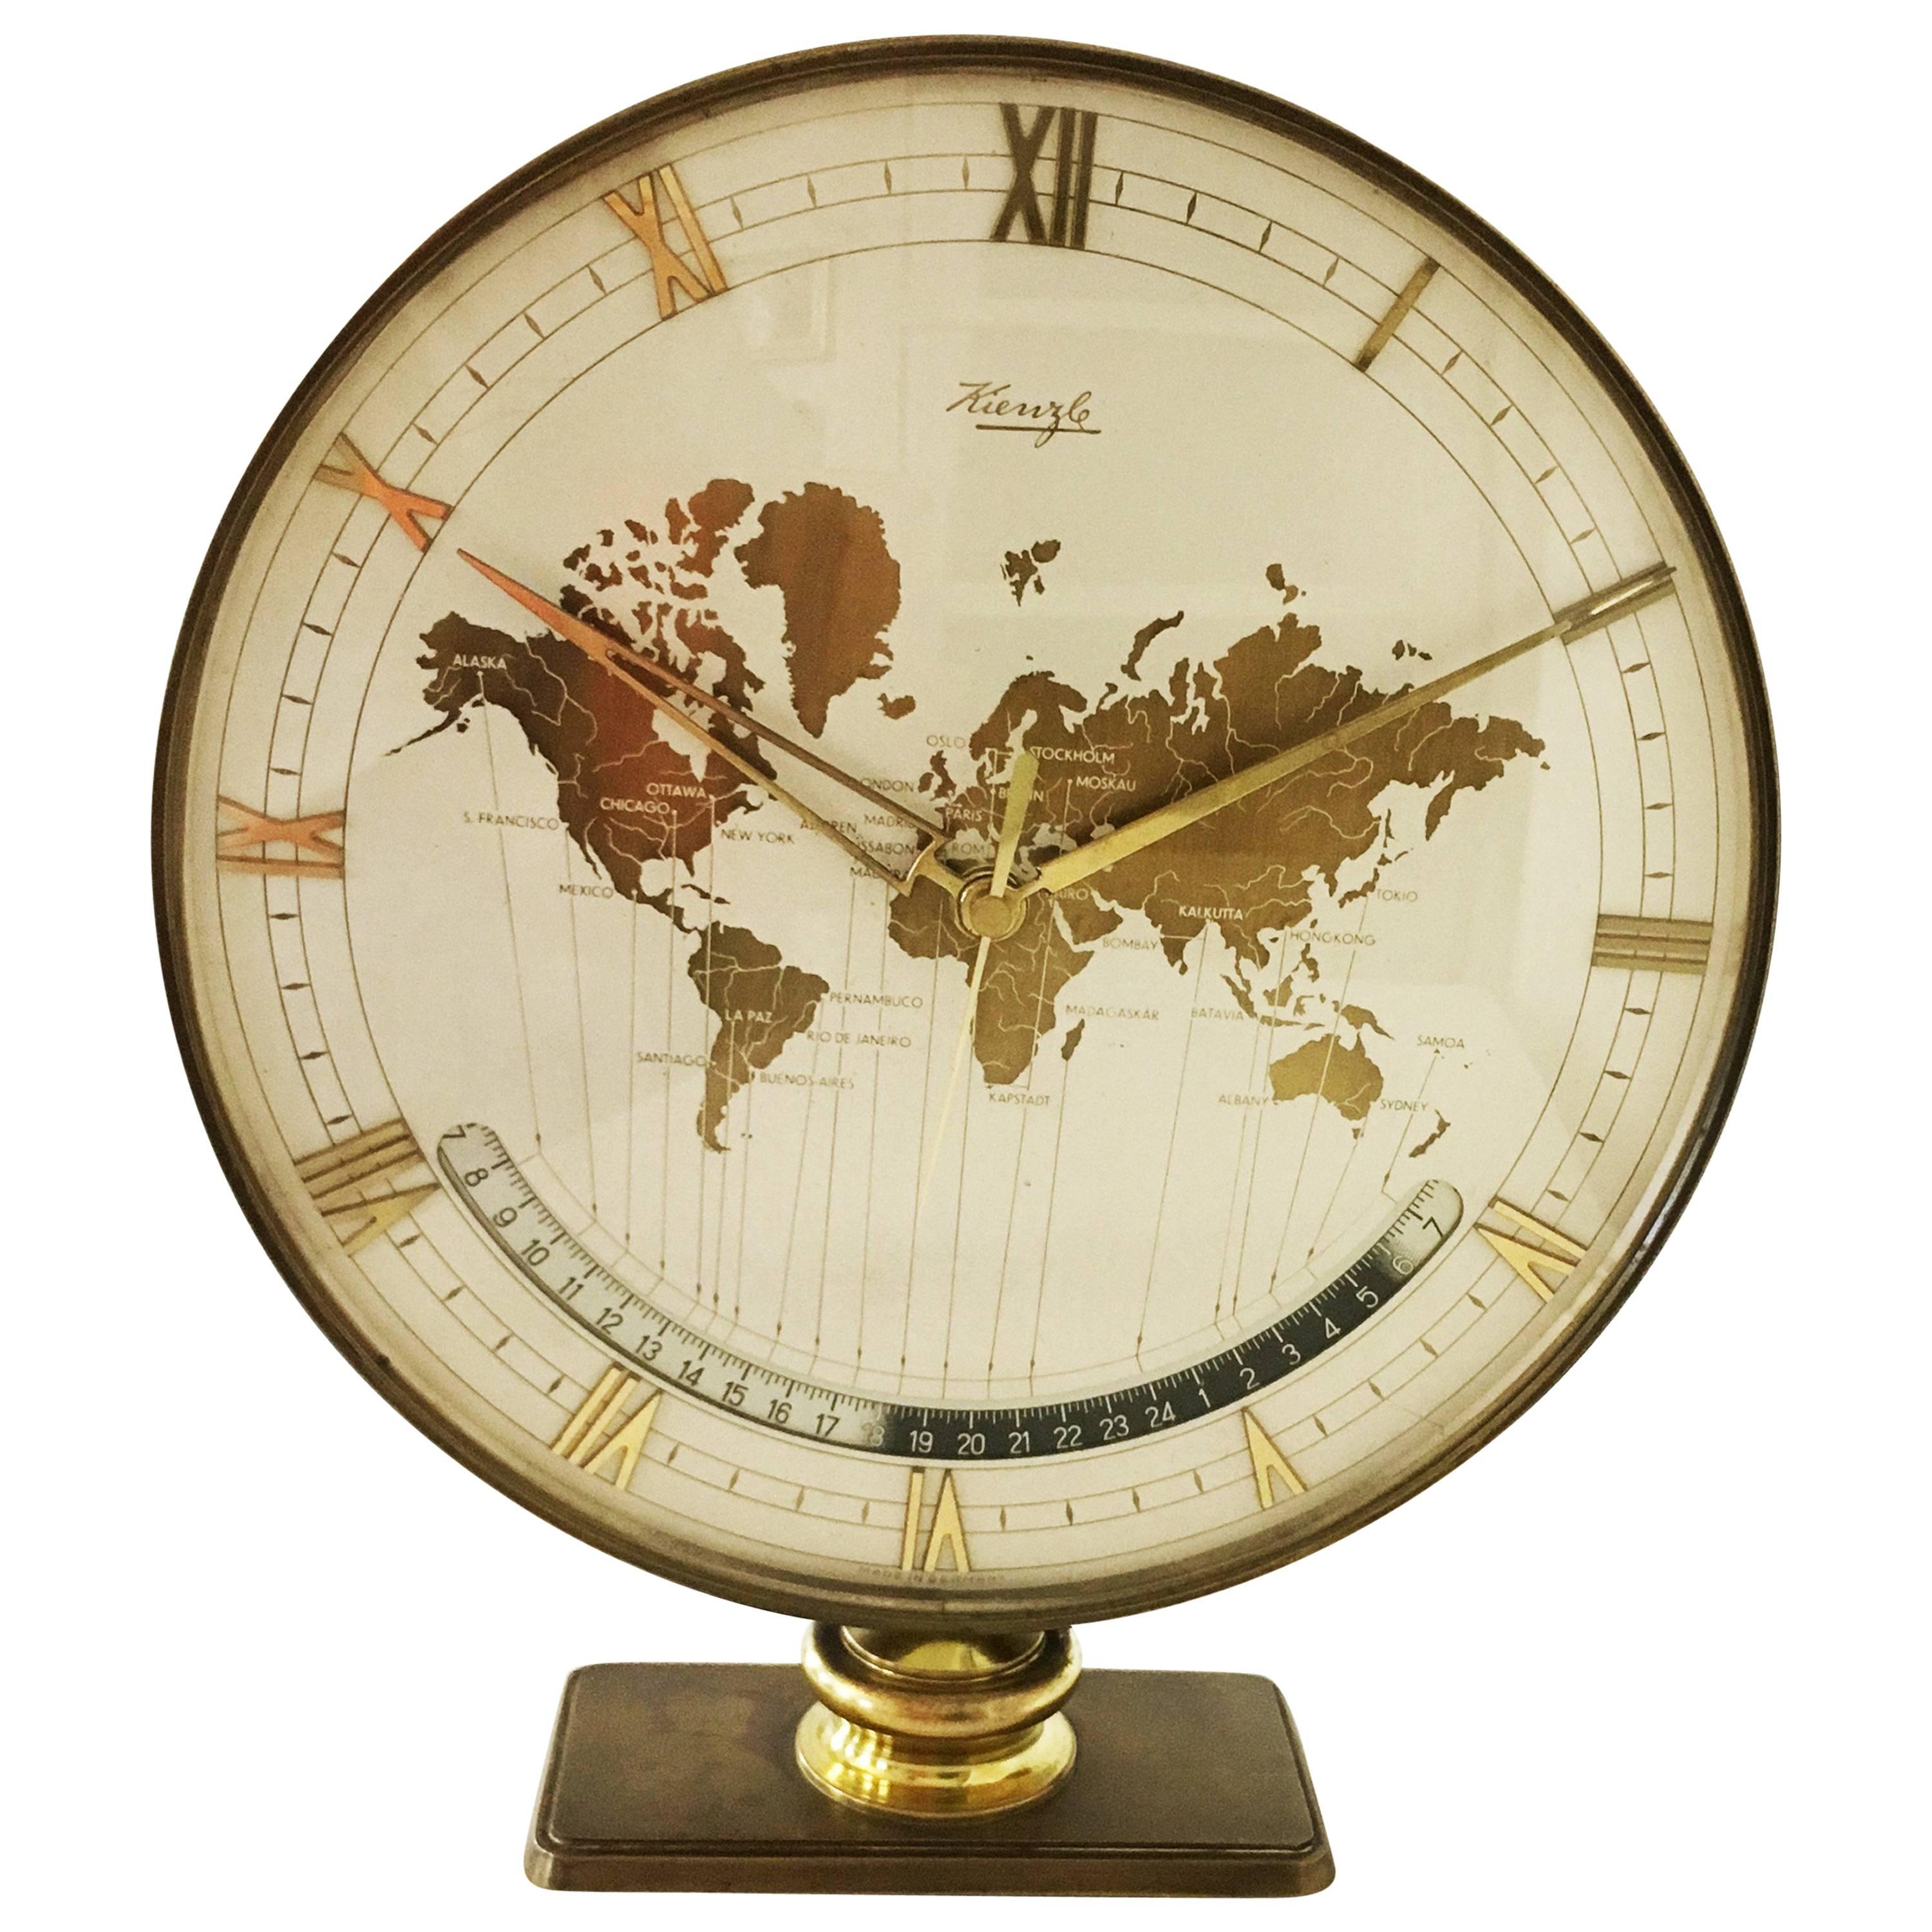 Big Kienzle Weltzeituhr Modernist Table World Timer Zone Clock For Sale